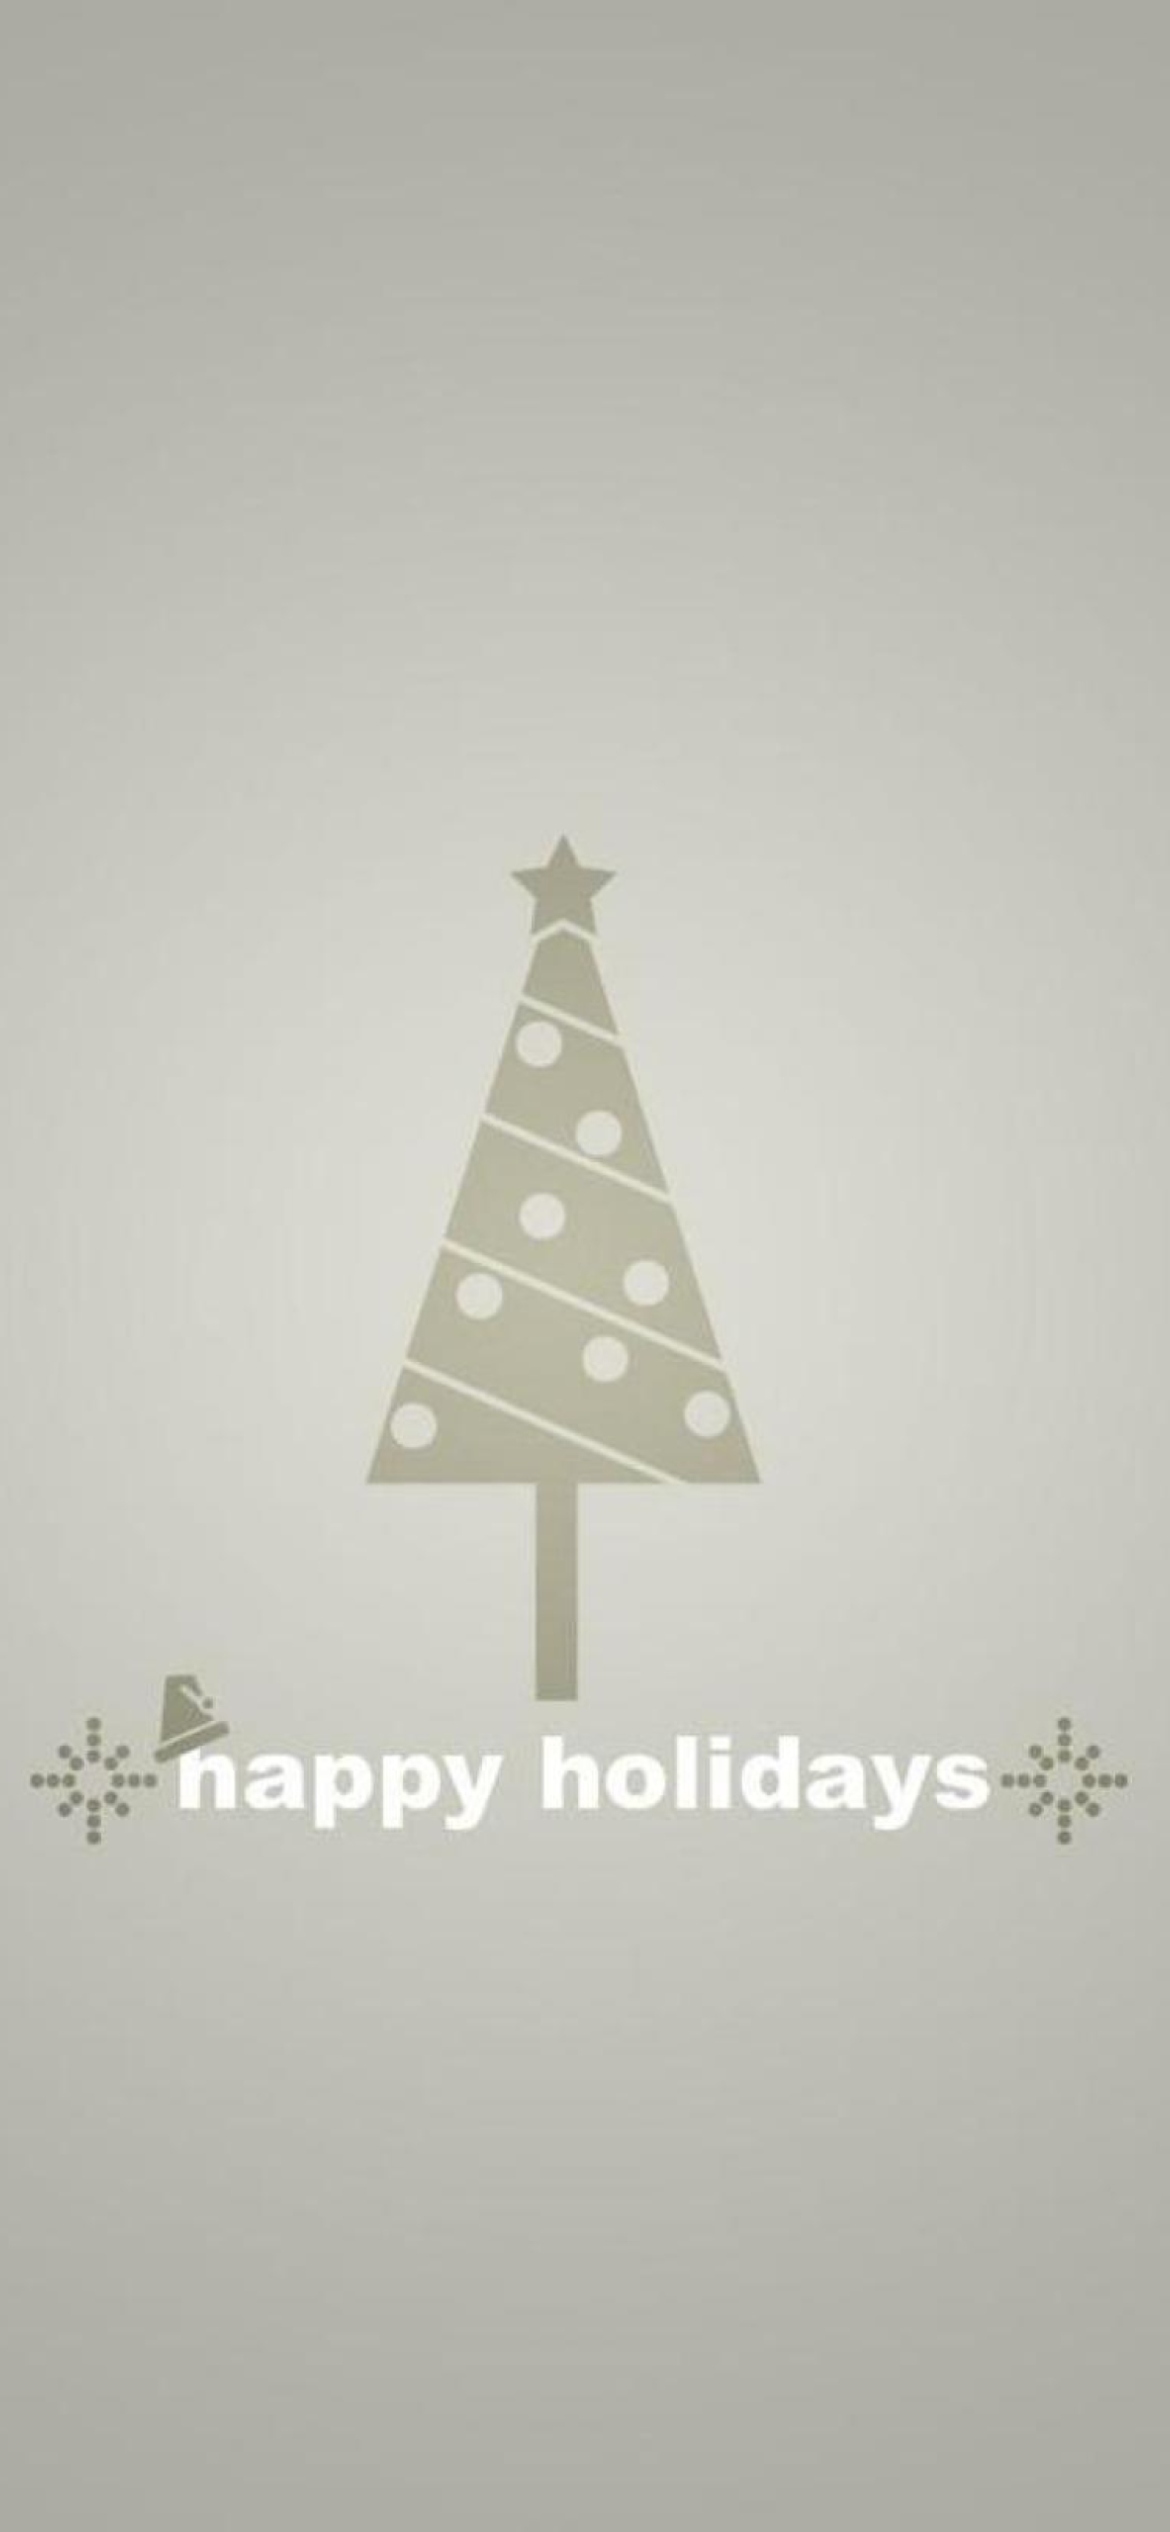 Happy Holidays wallpaper 1170x2532